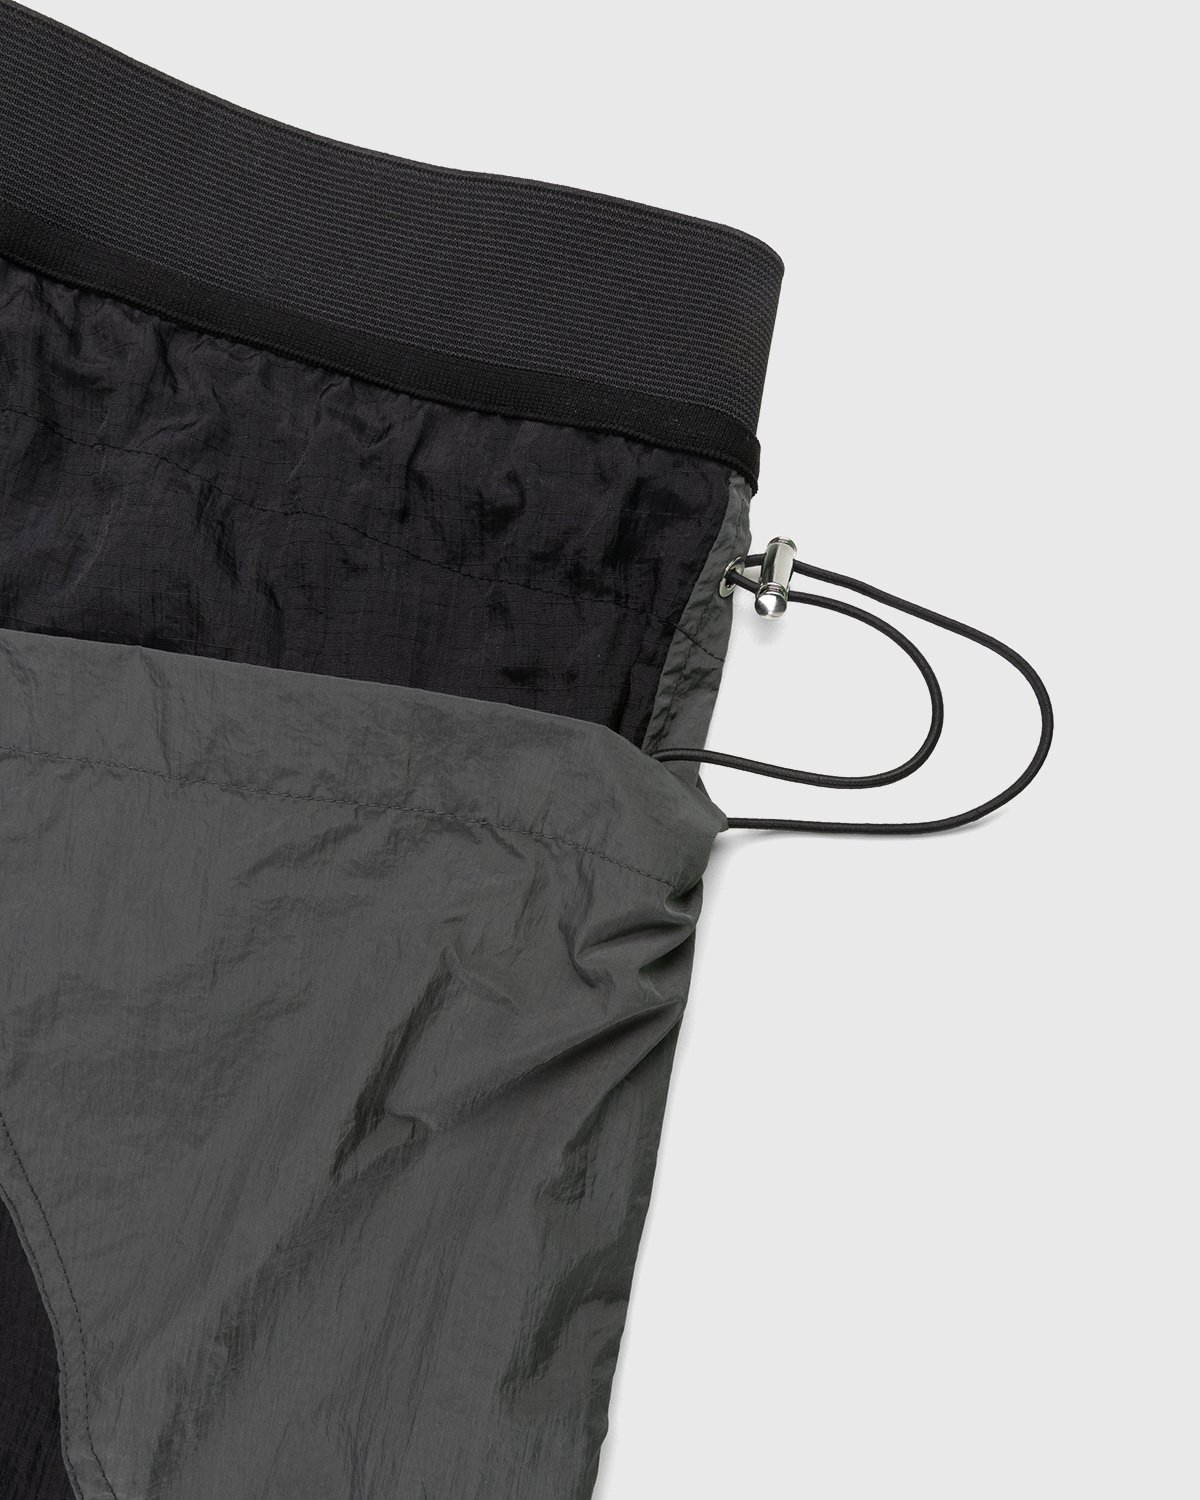 Arnar Mar Jonsson - Oroi Paneled Trouser Black/Charcoal - Clothing - Brown - Image 3